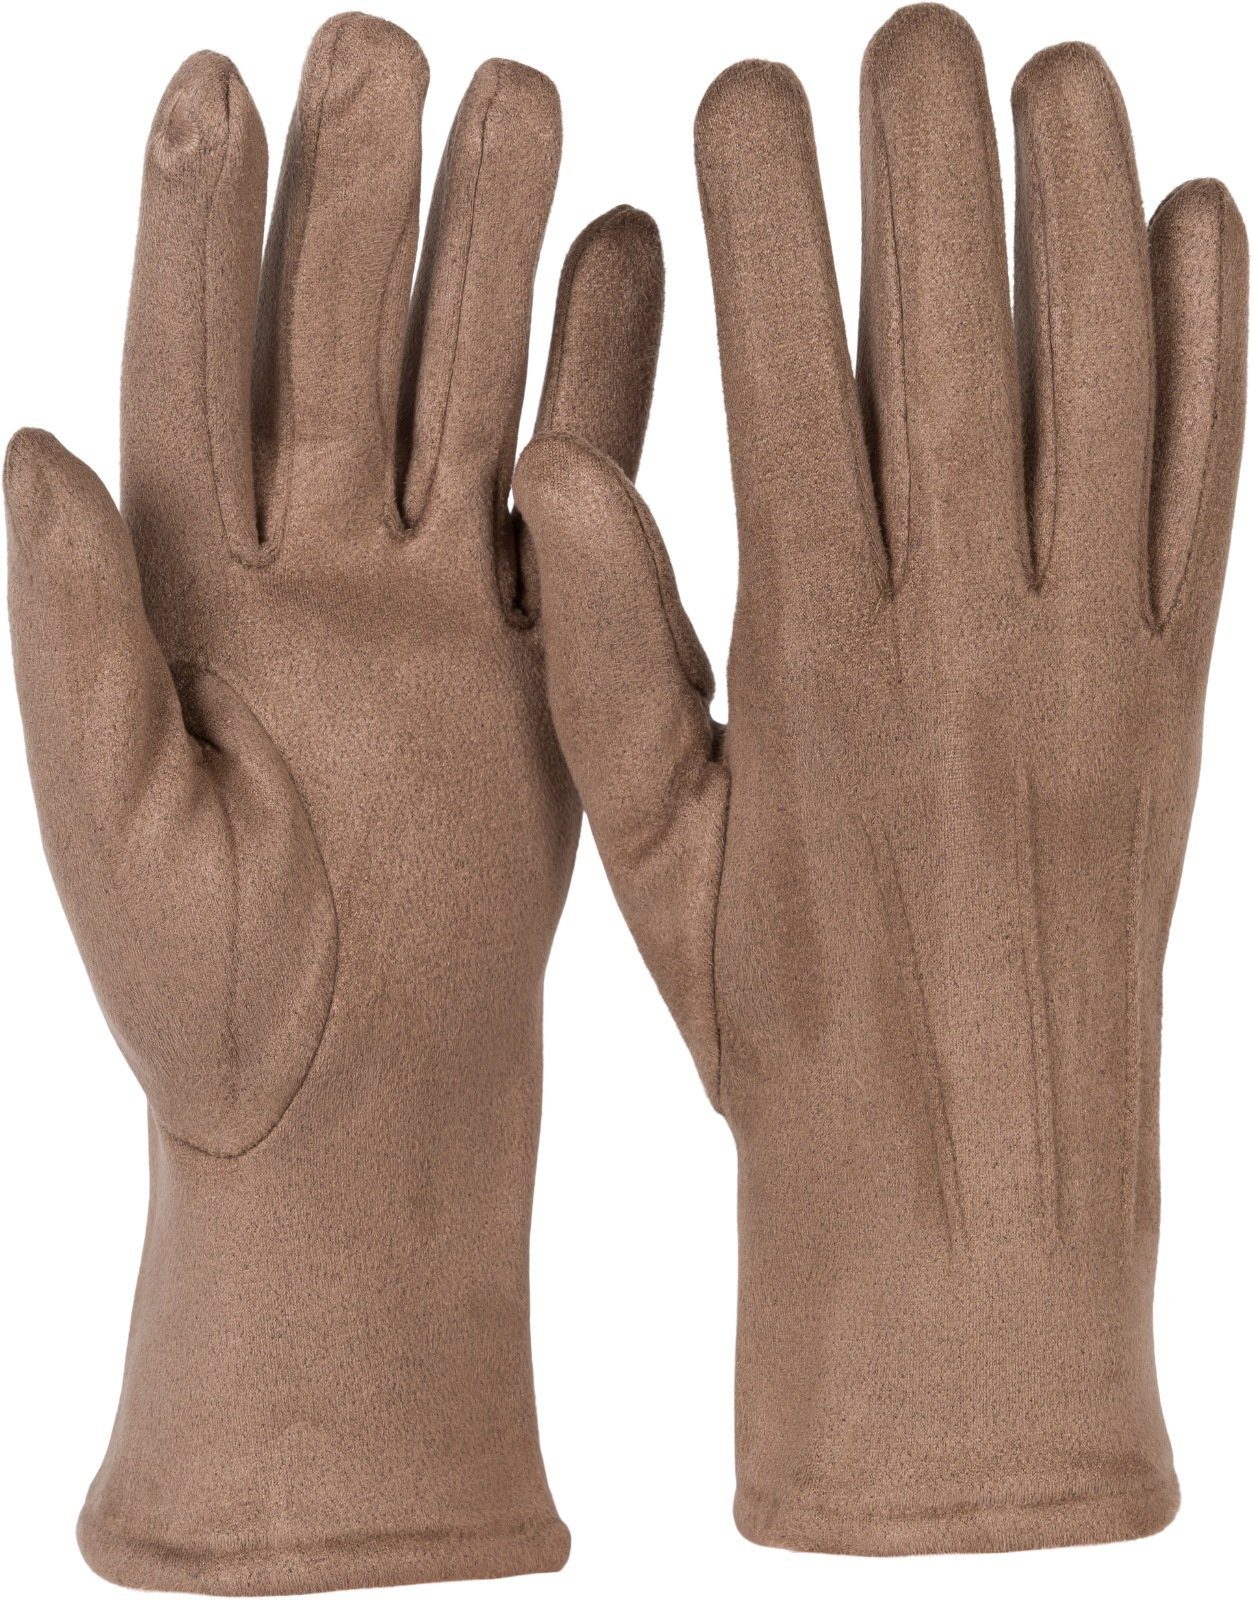 styleBREAKER Ziernähte Einfarbige Fleecehandschuhe Touchscreen Handschuhe Taupe